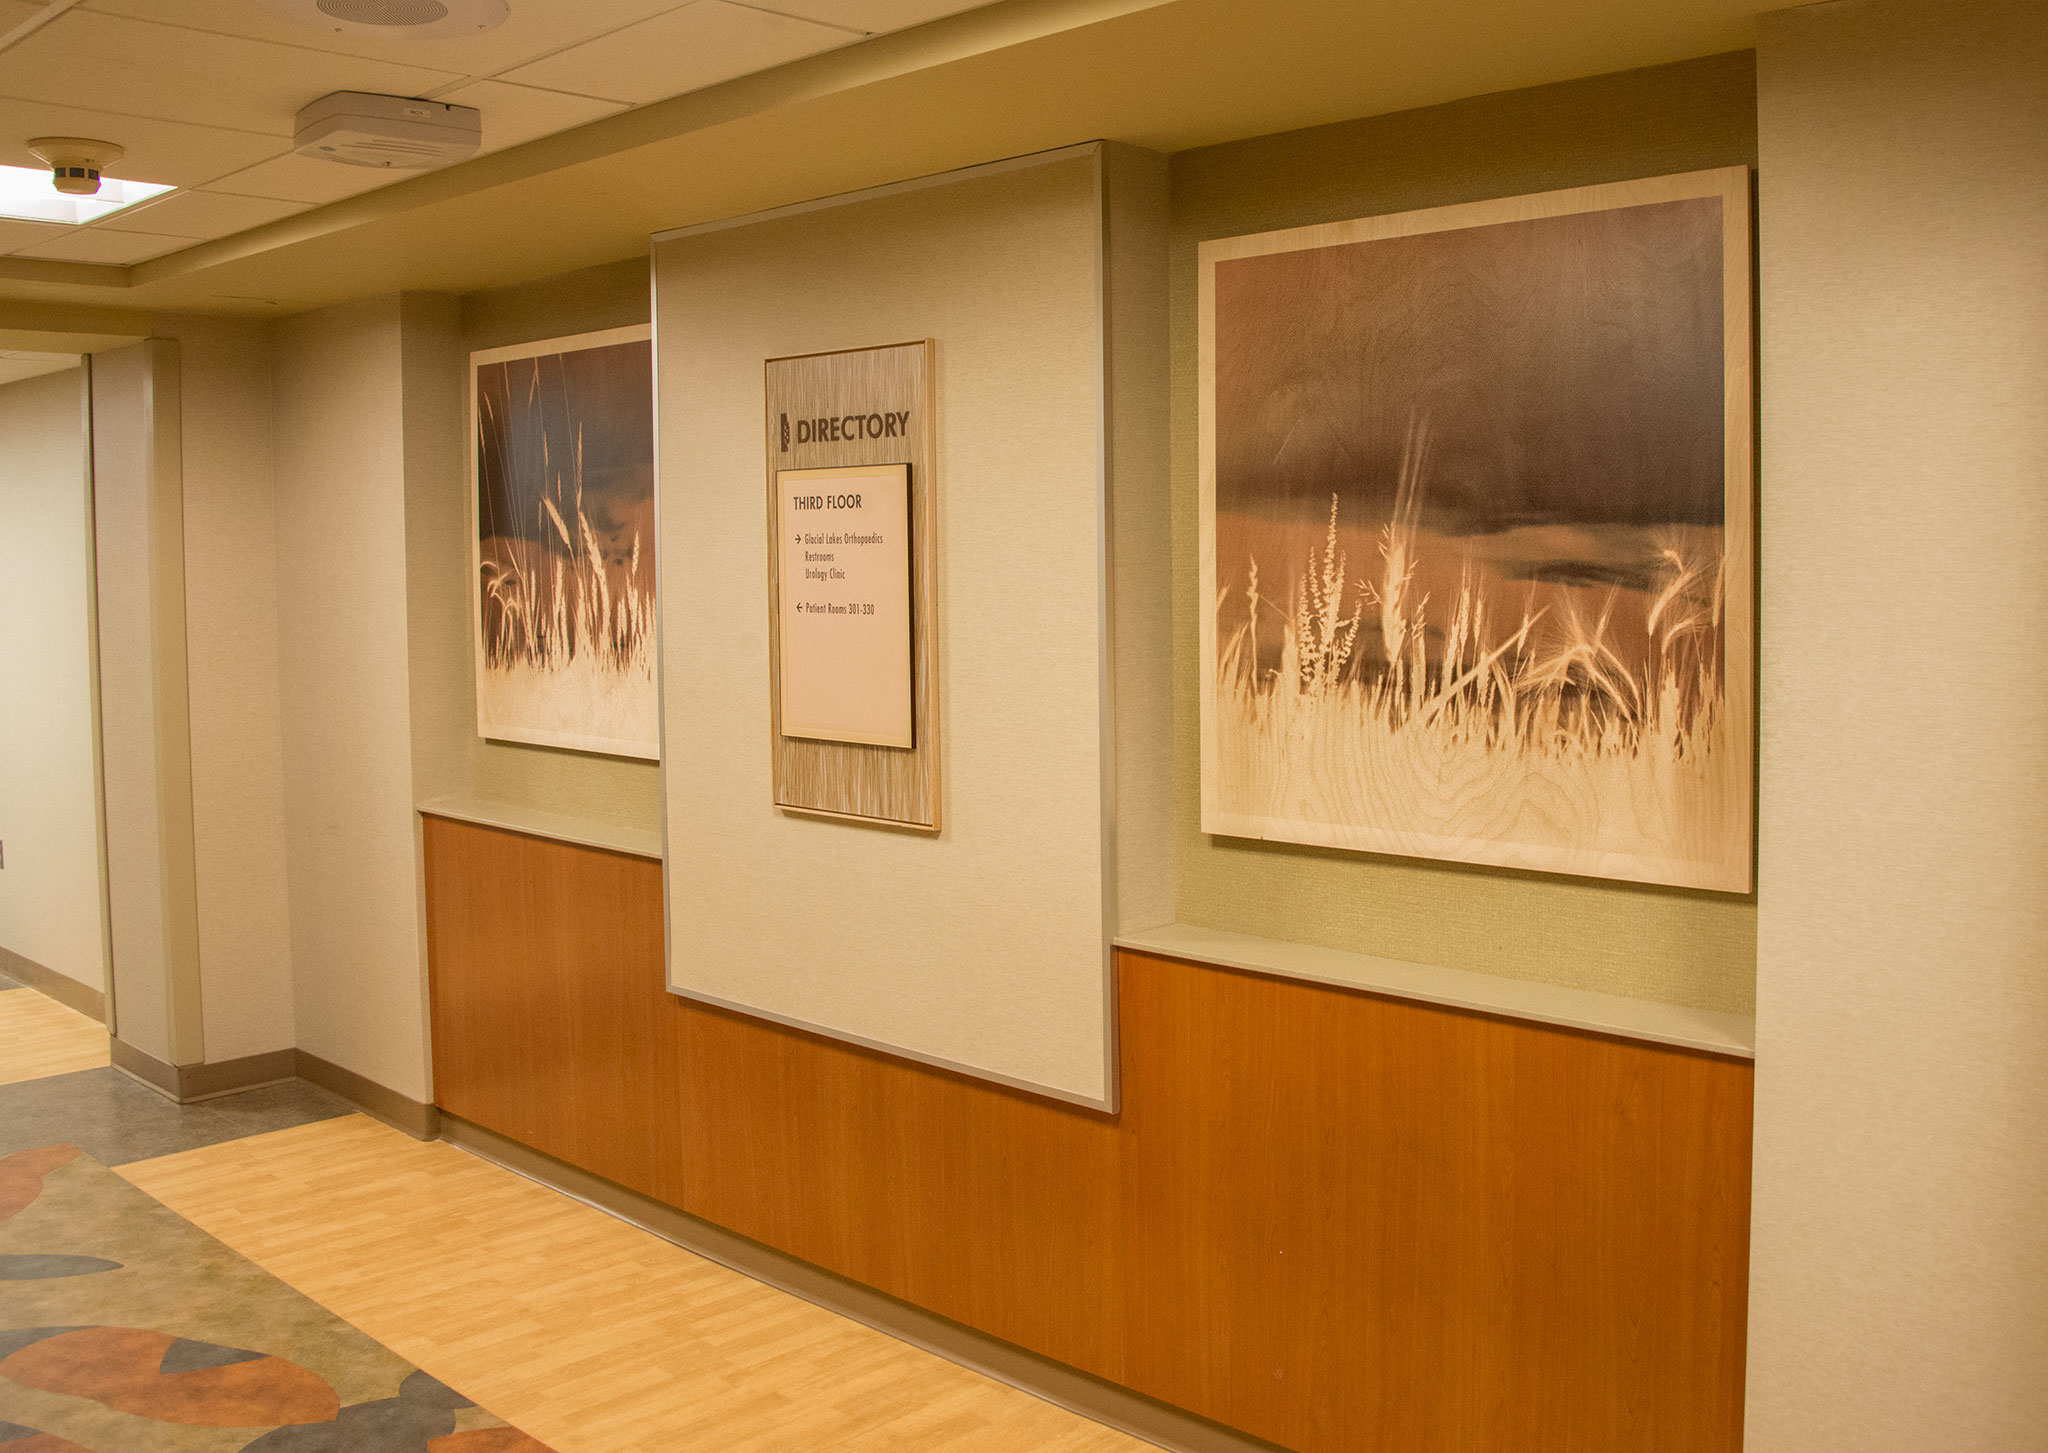 VICINITY - Hospital Artwork by Elevators